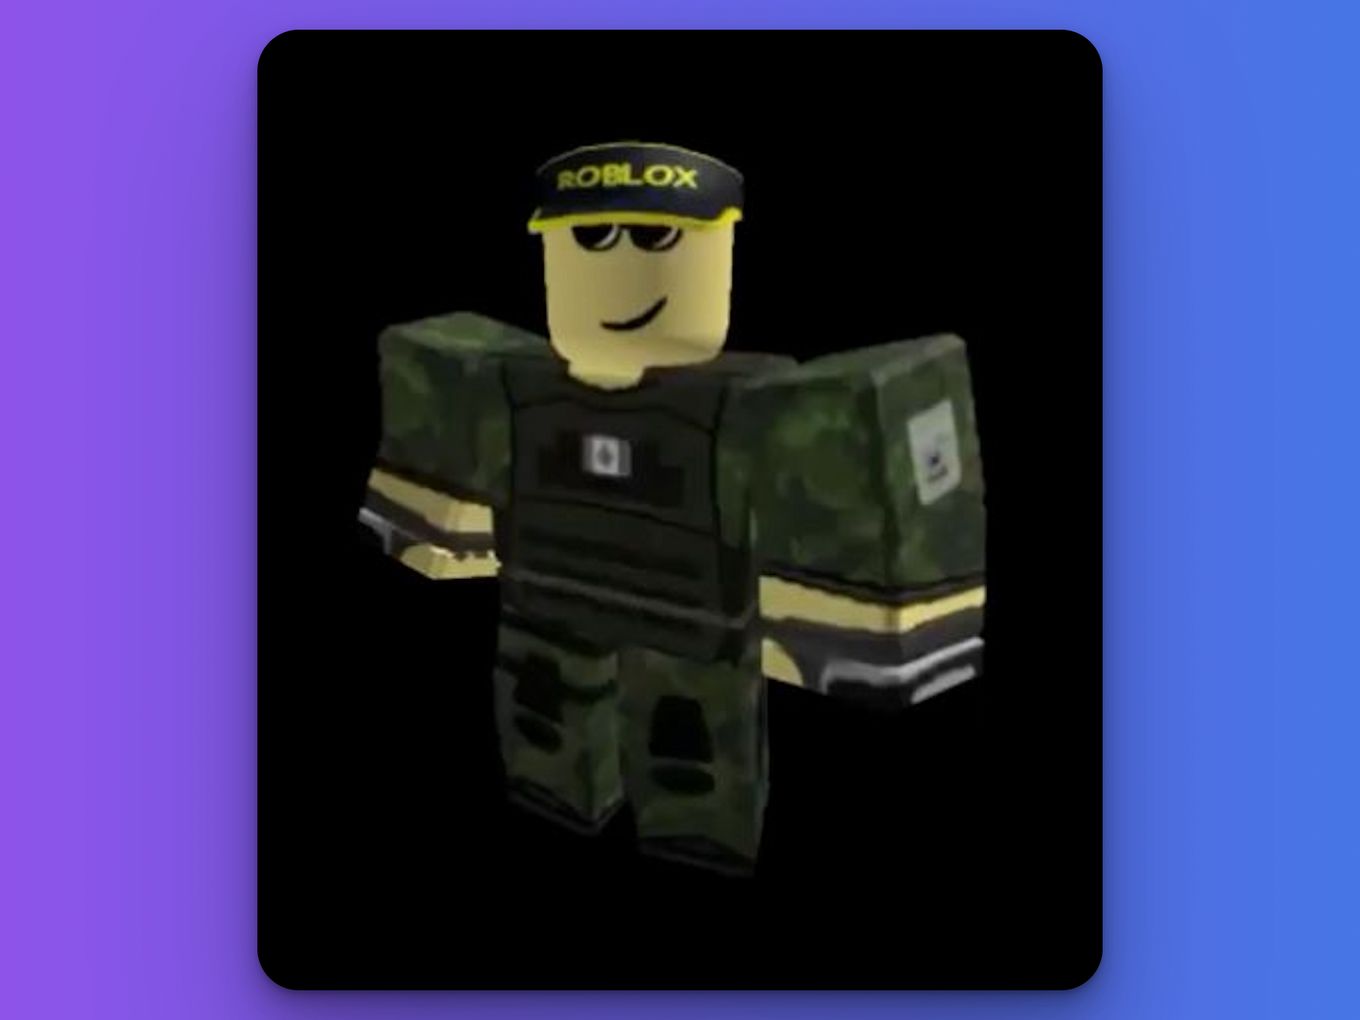 Good Classic Roblox Avatars - Army Guy